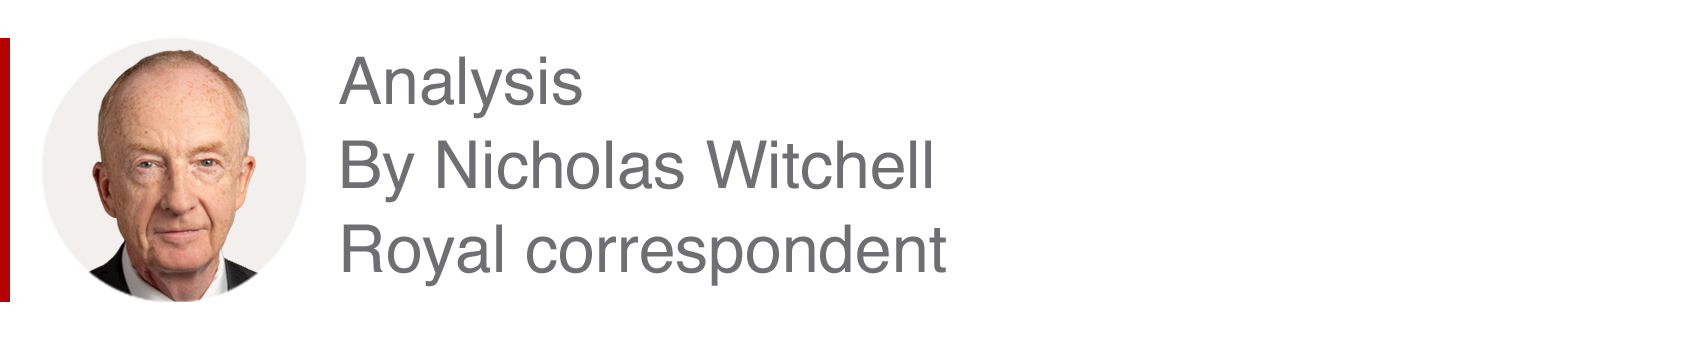 Analysis box by Nicholas Witchell, royal correspondent